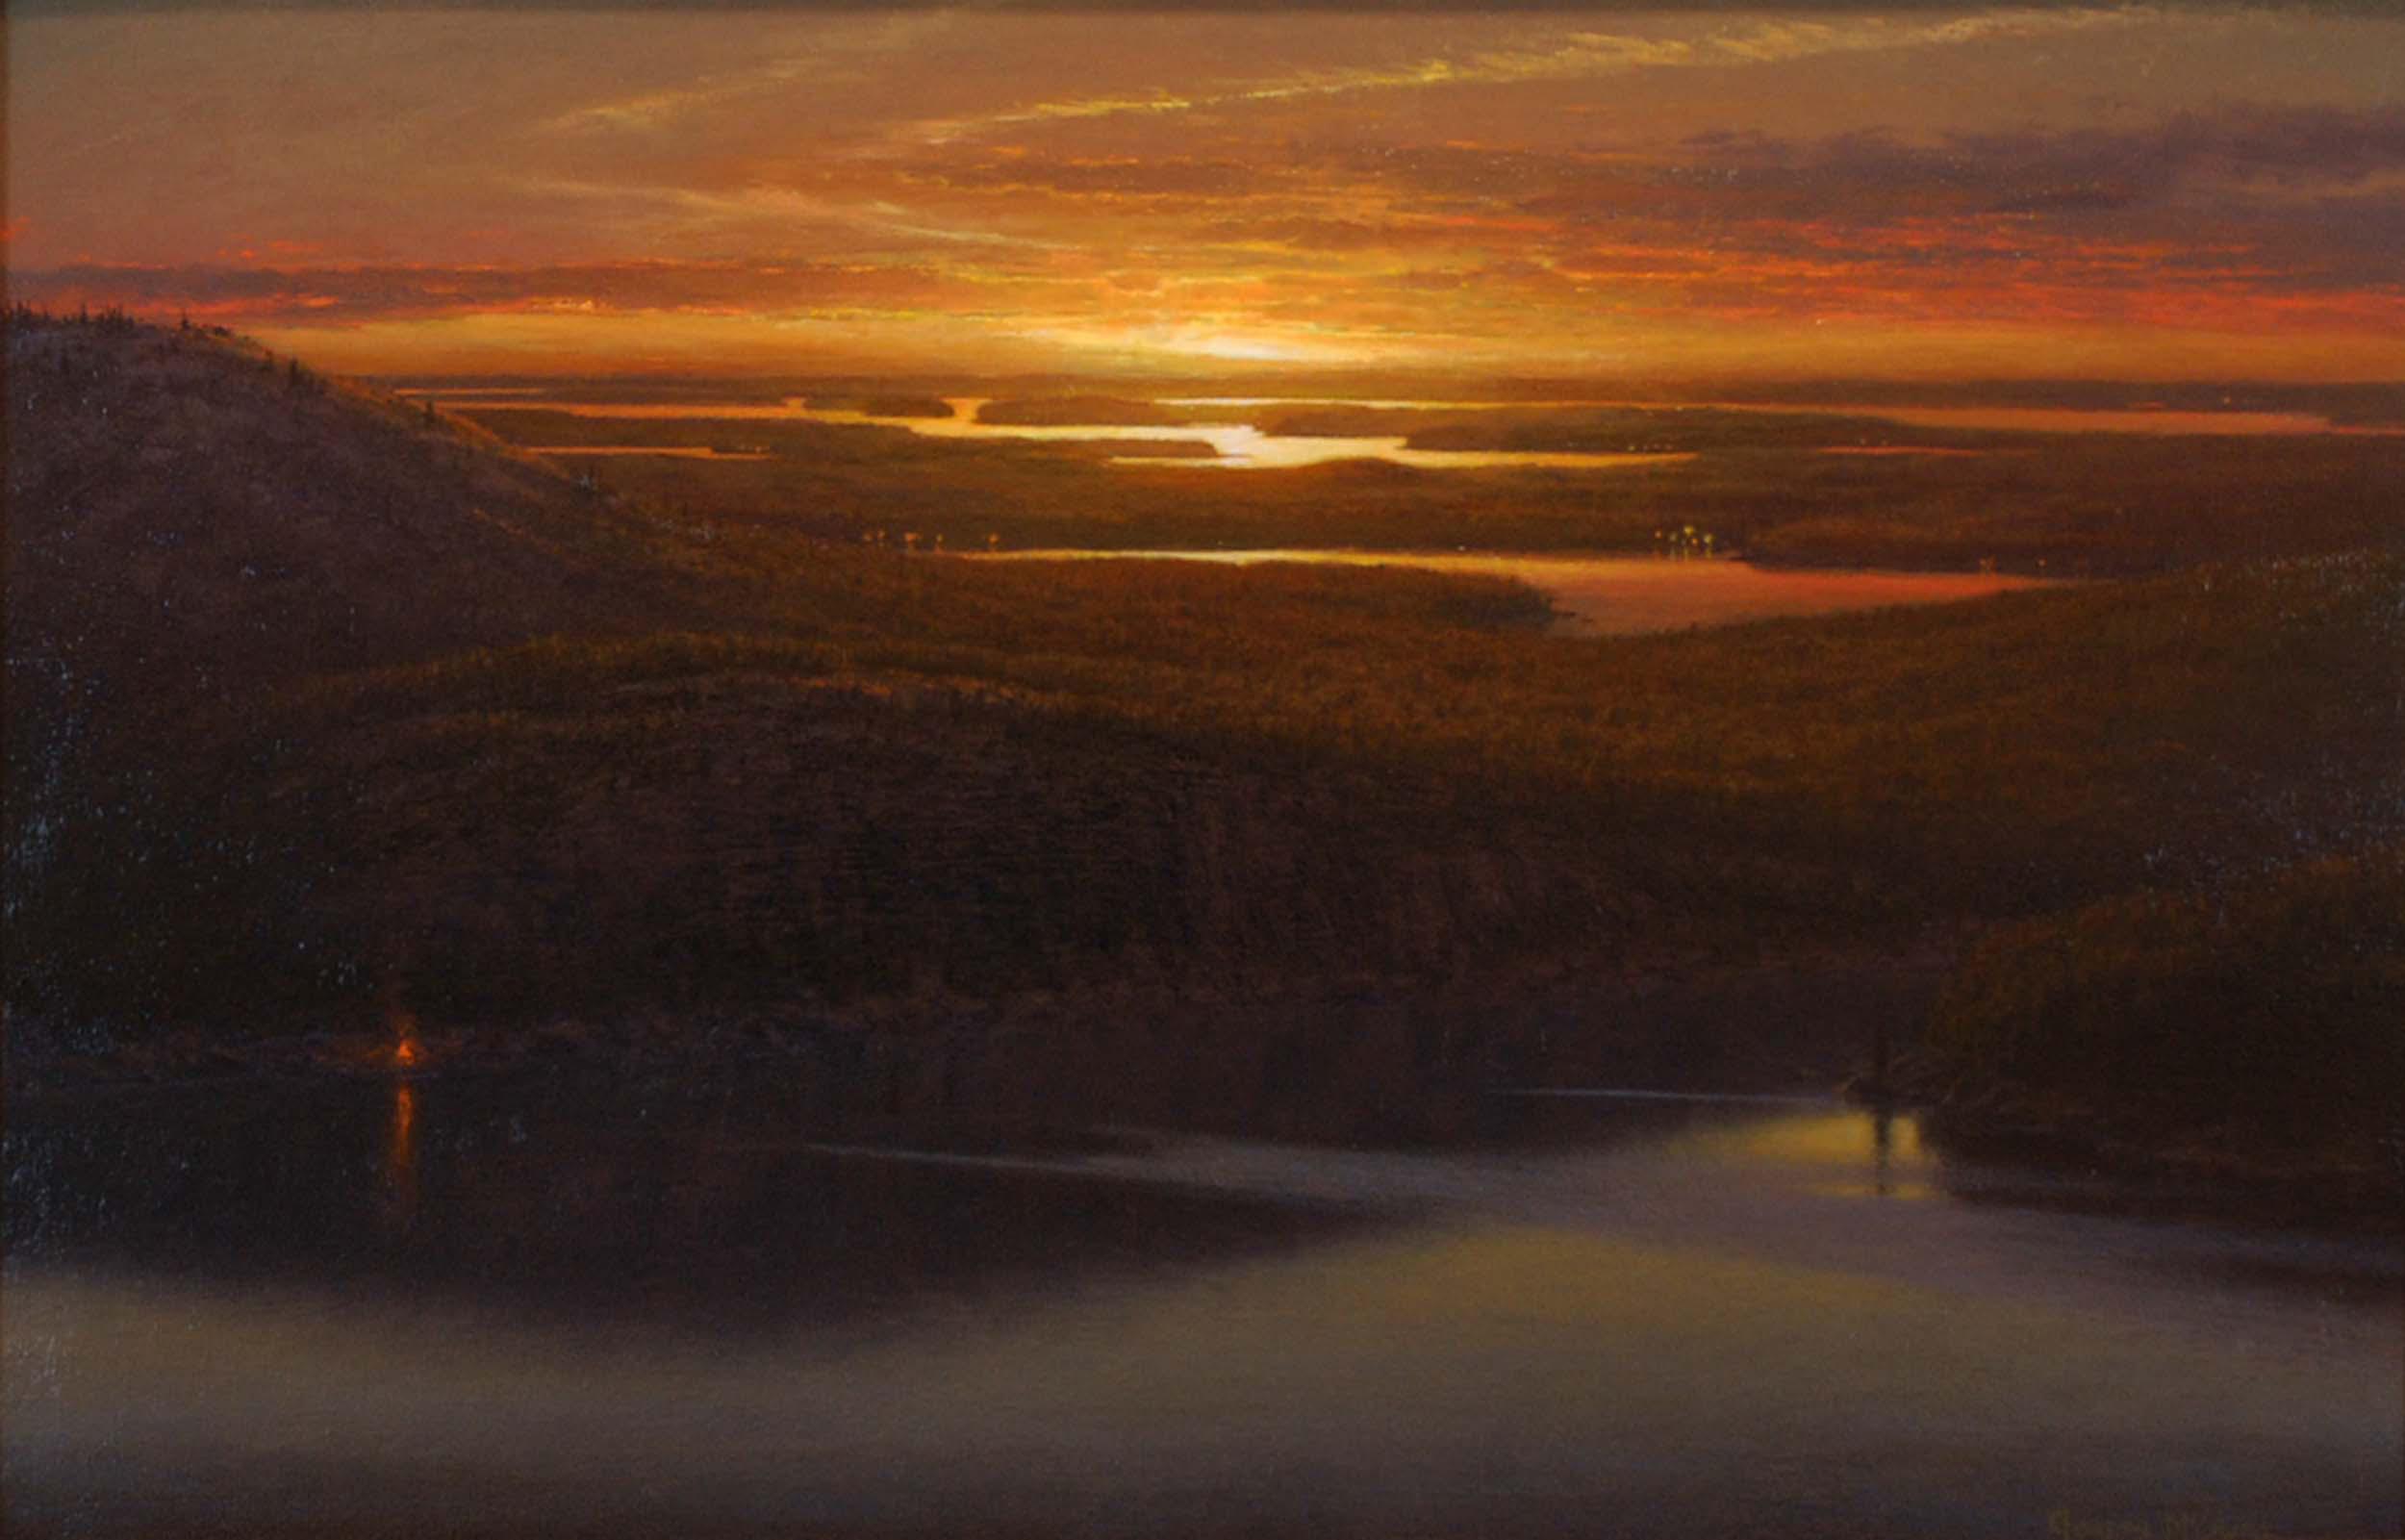 Joseph McGurl, "Last Light, Mt. Desert," 23 x 29 inches, Oil on panel